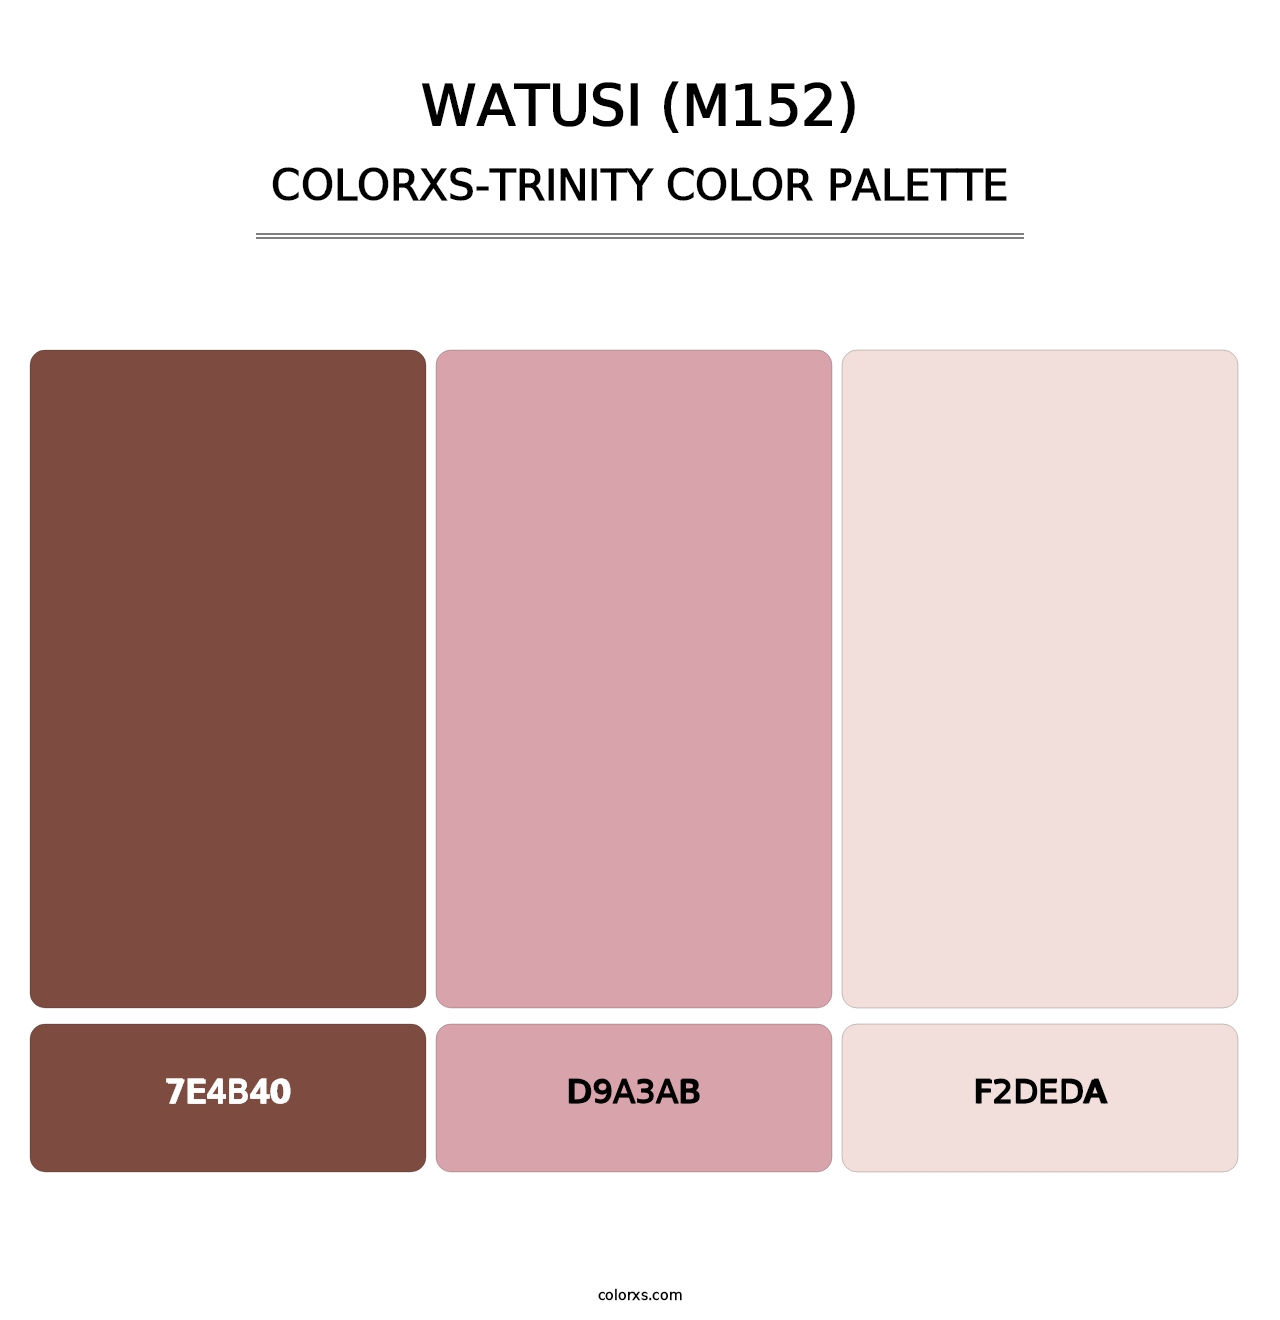 Watusi (M152) - Colorxs Trinity Palette